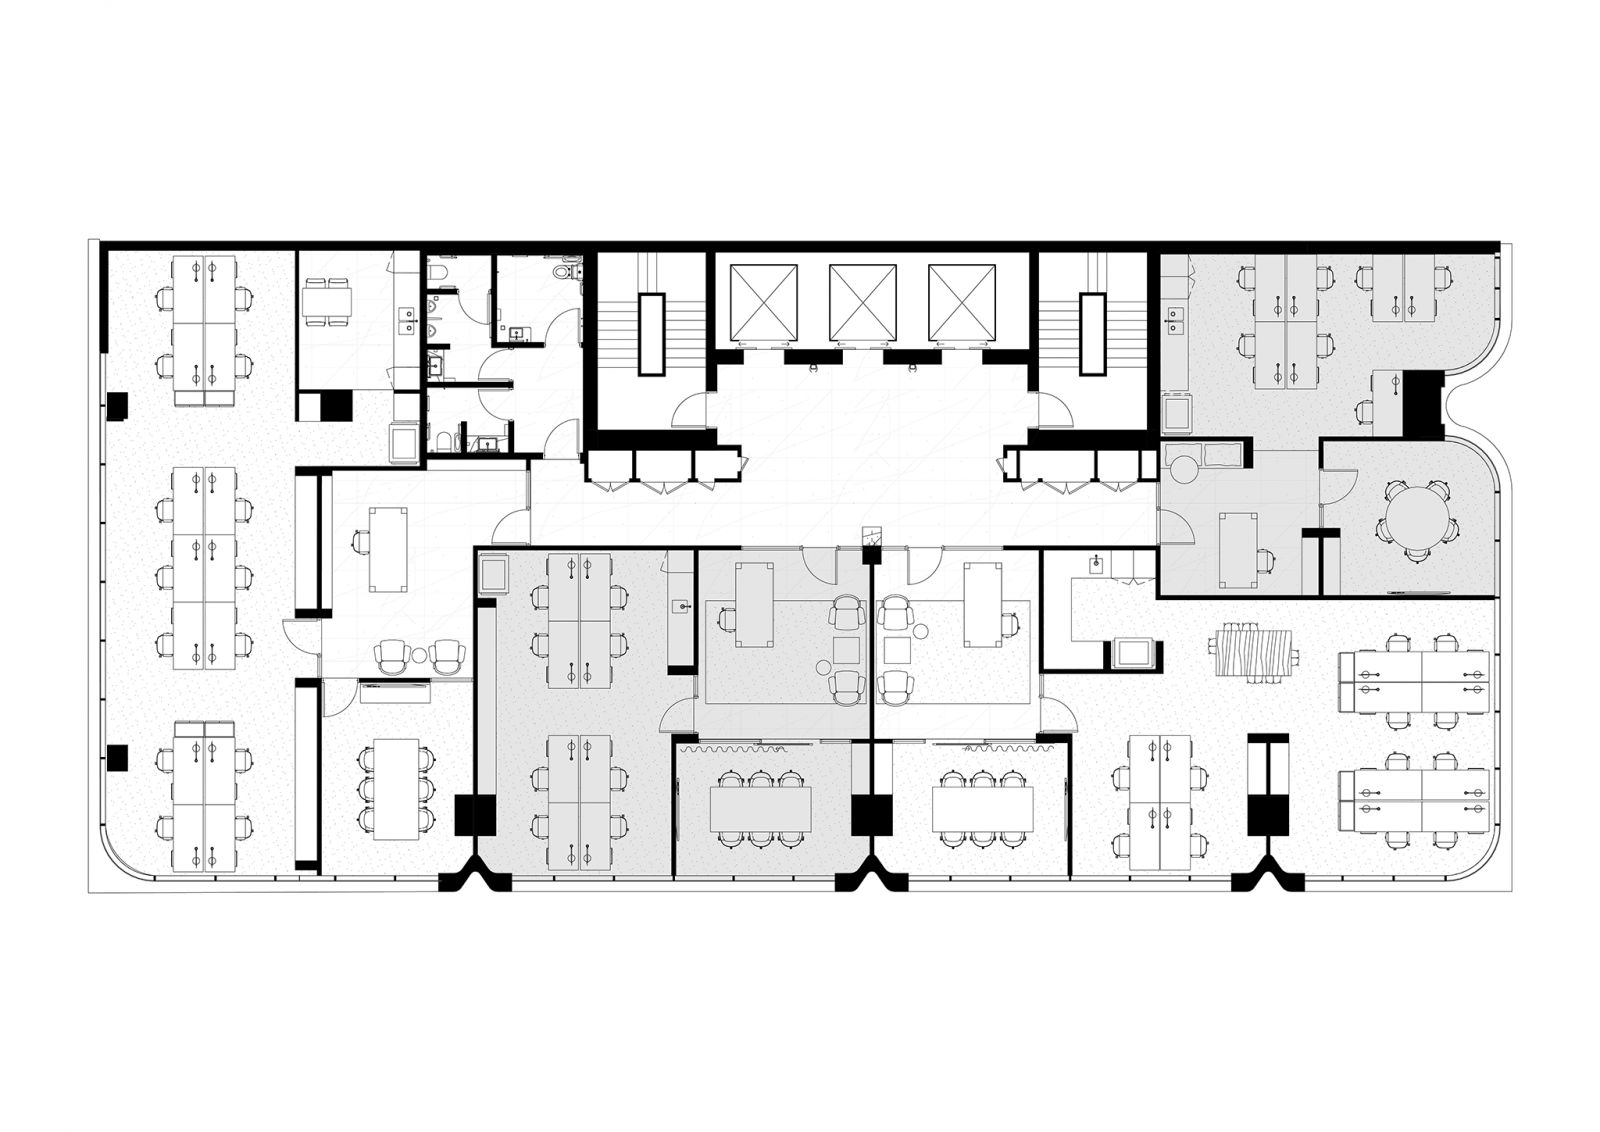 Podium floorplan, four tenancies, 1:10 population density ratio